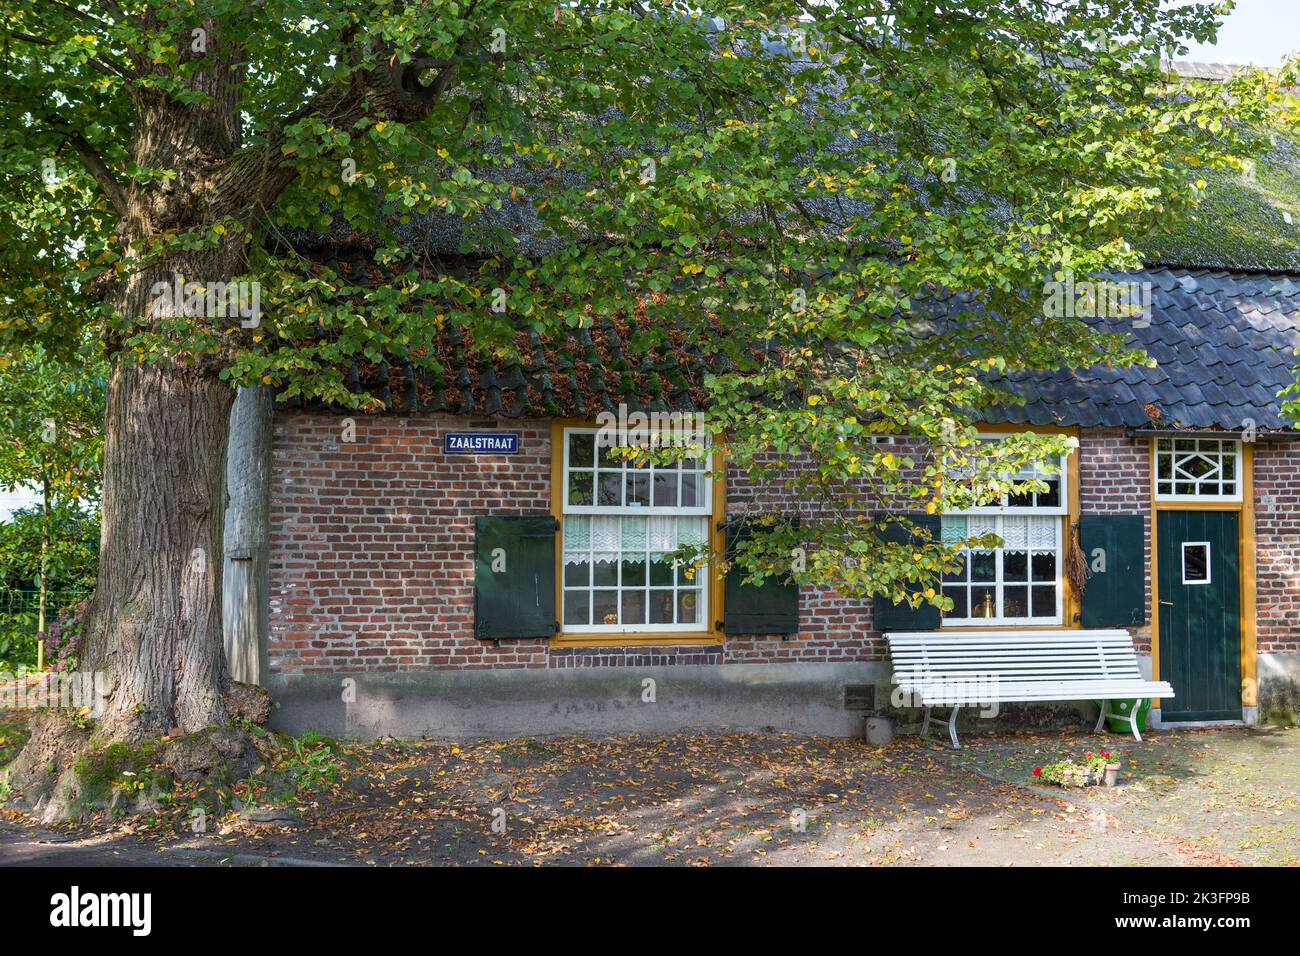 Antica casa colonica tradizionale a Leenderstrijp, Paesi Bassi Foto Stock